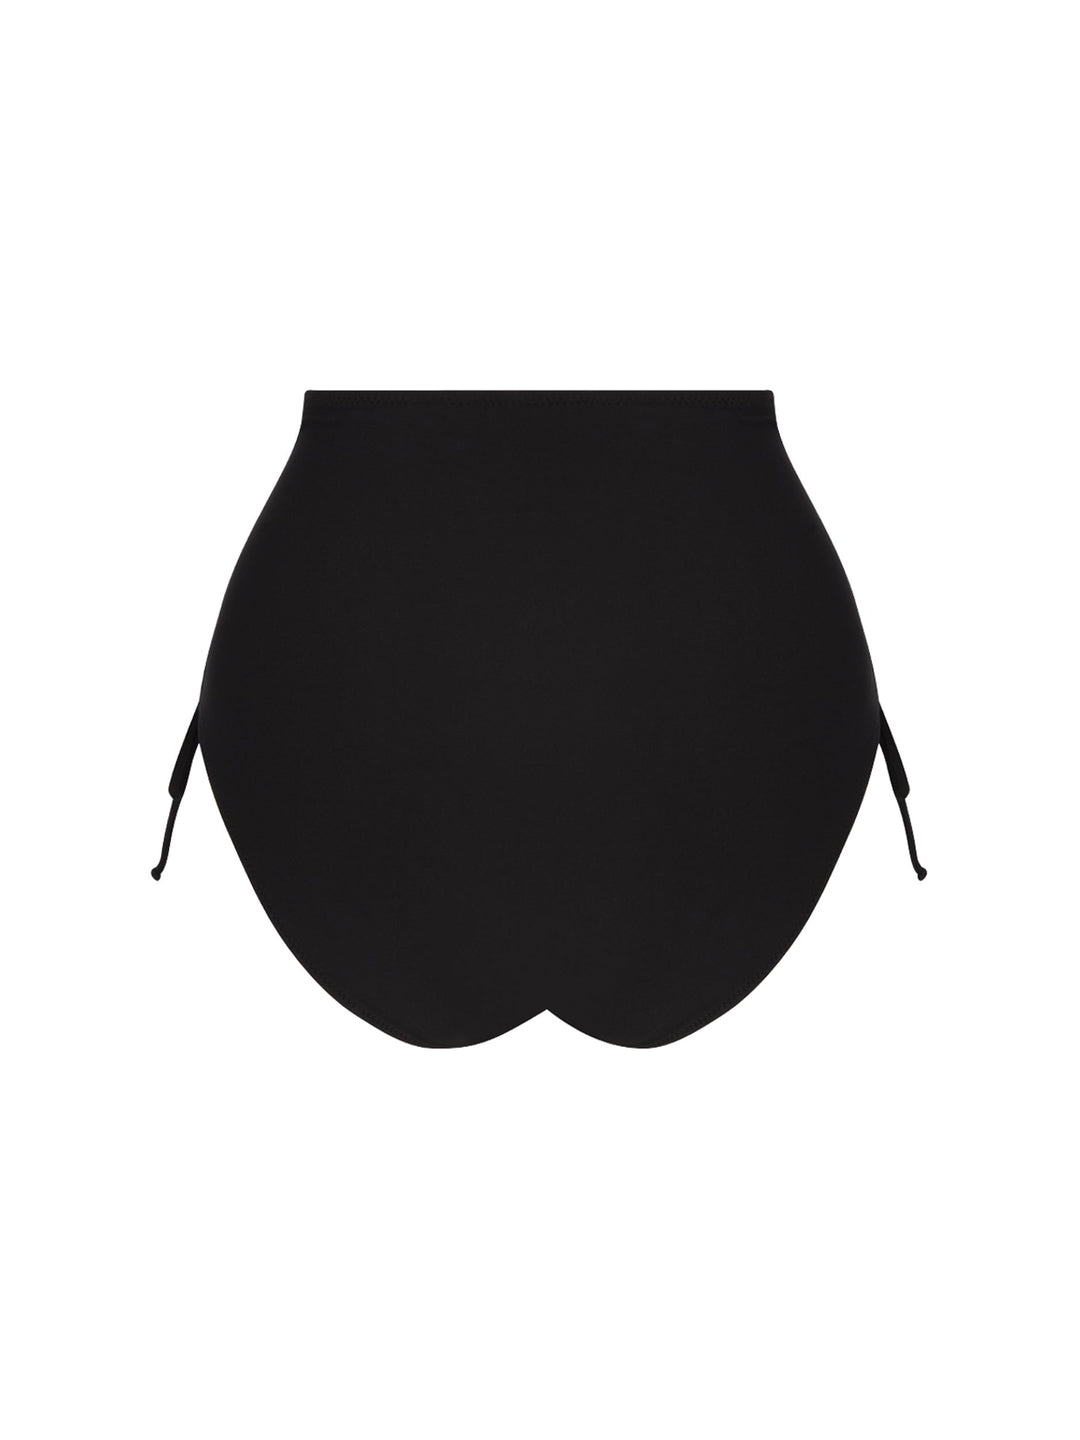 Antigel by Lise Charmel - La Chiquissima Slip bikini a vita alta Noir Slip bikini intero Antigel by Lise Charmel Swimwear